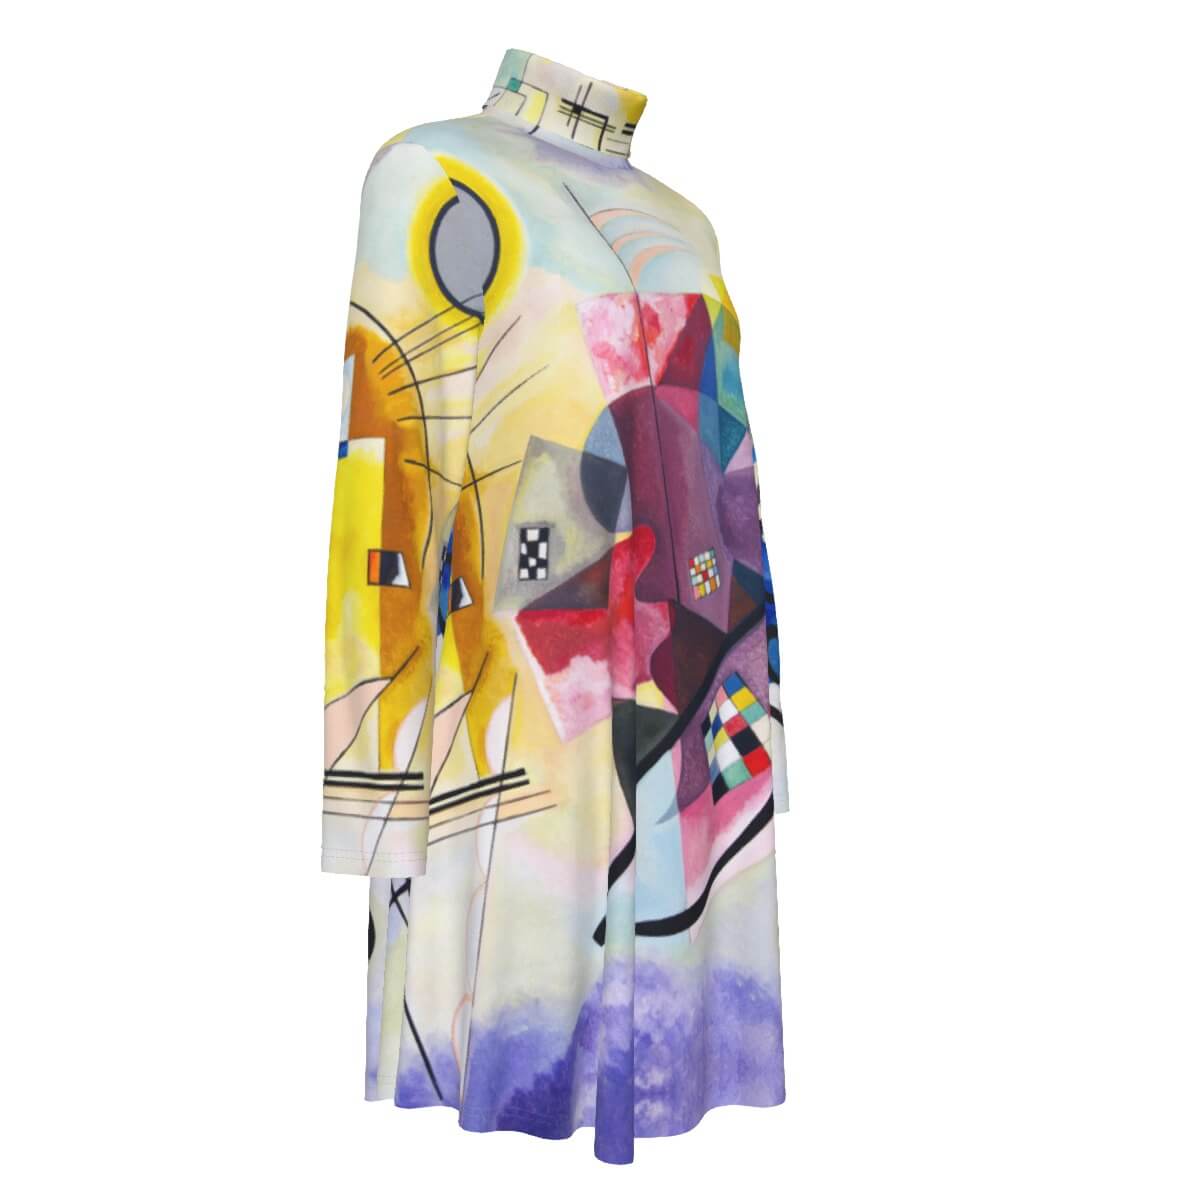 Colorful Geometric Apparel - Statement Dress